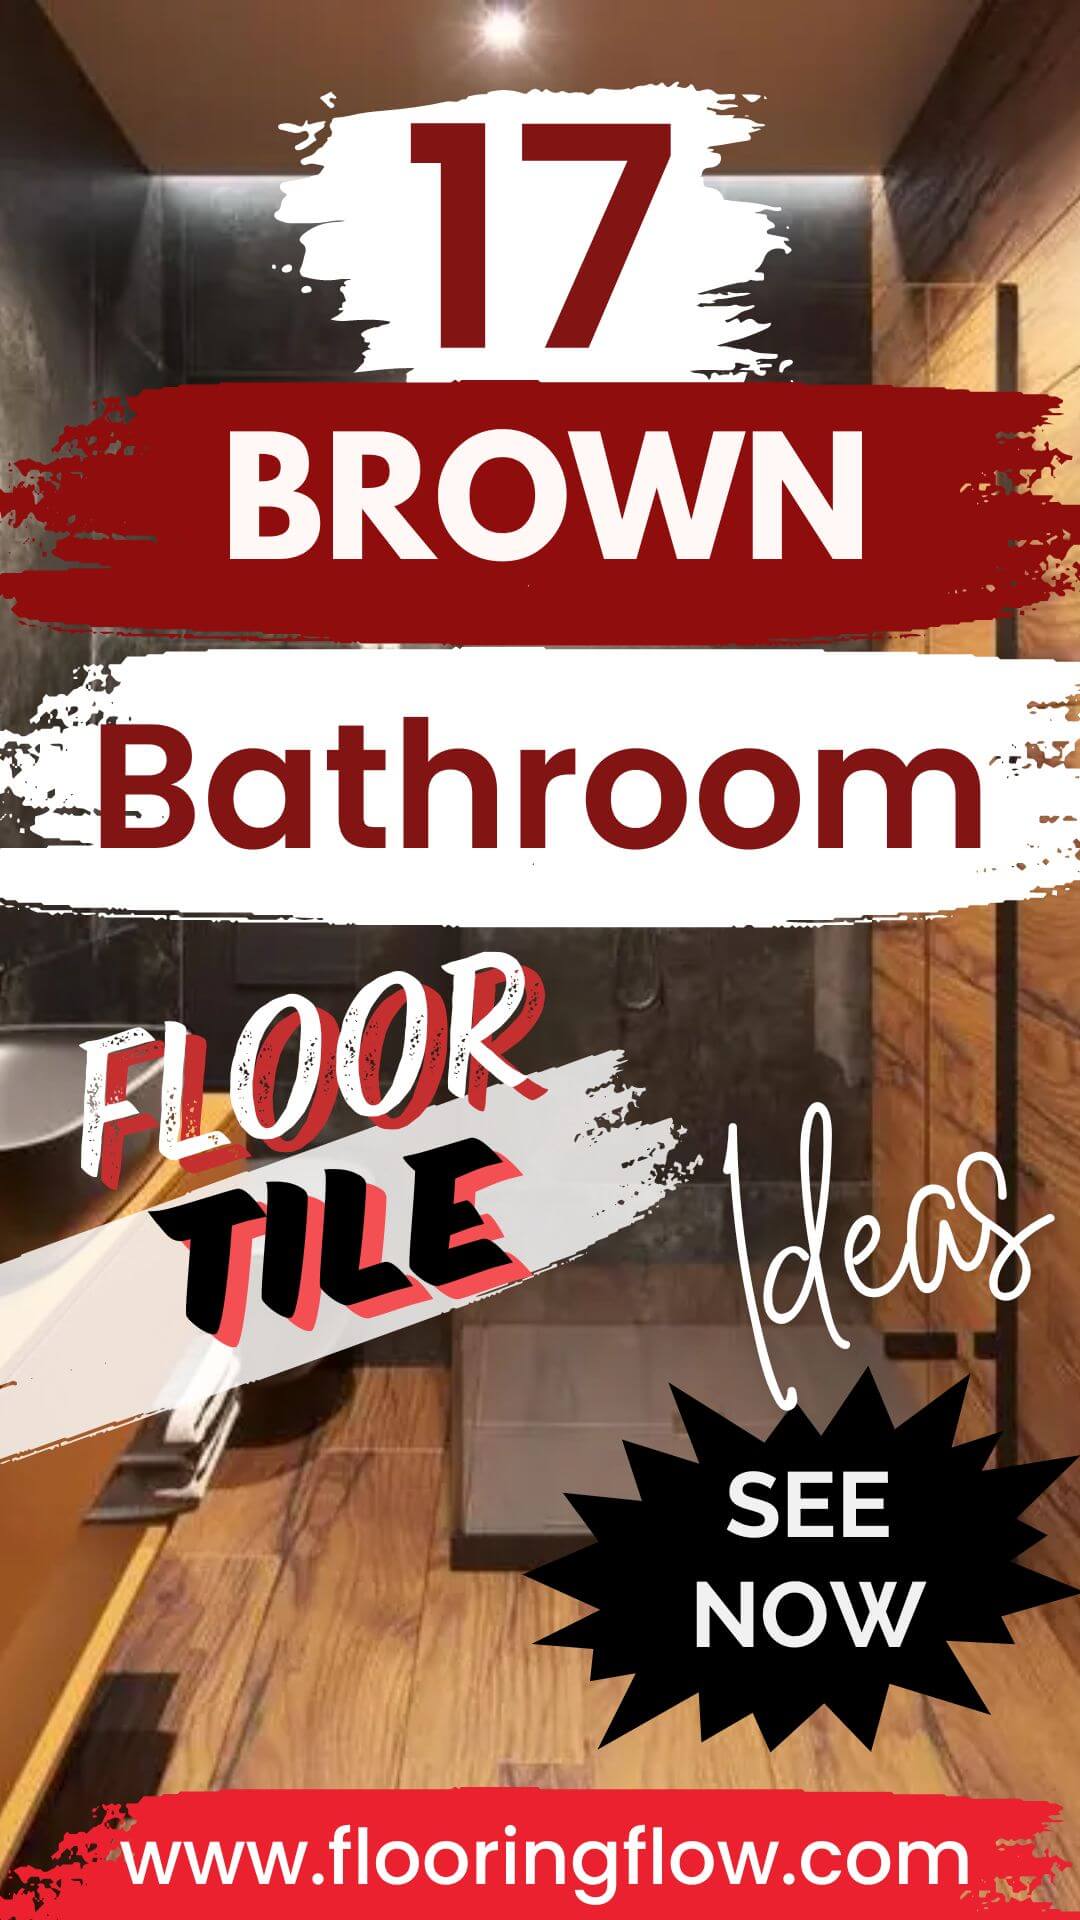 Brown bathroom floor tile ideas